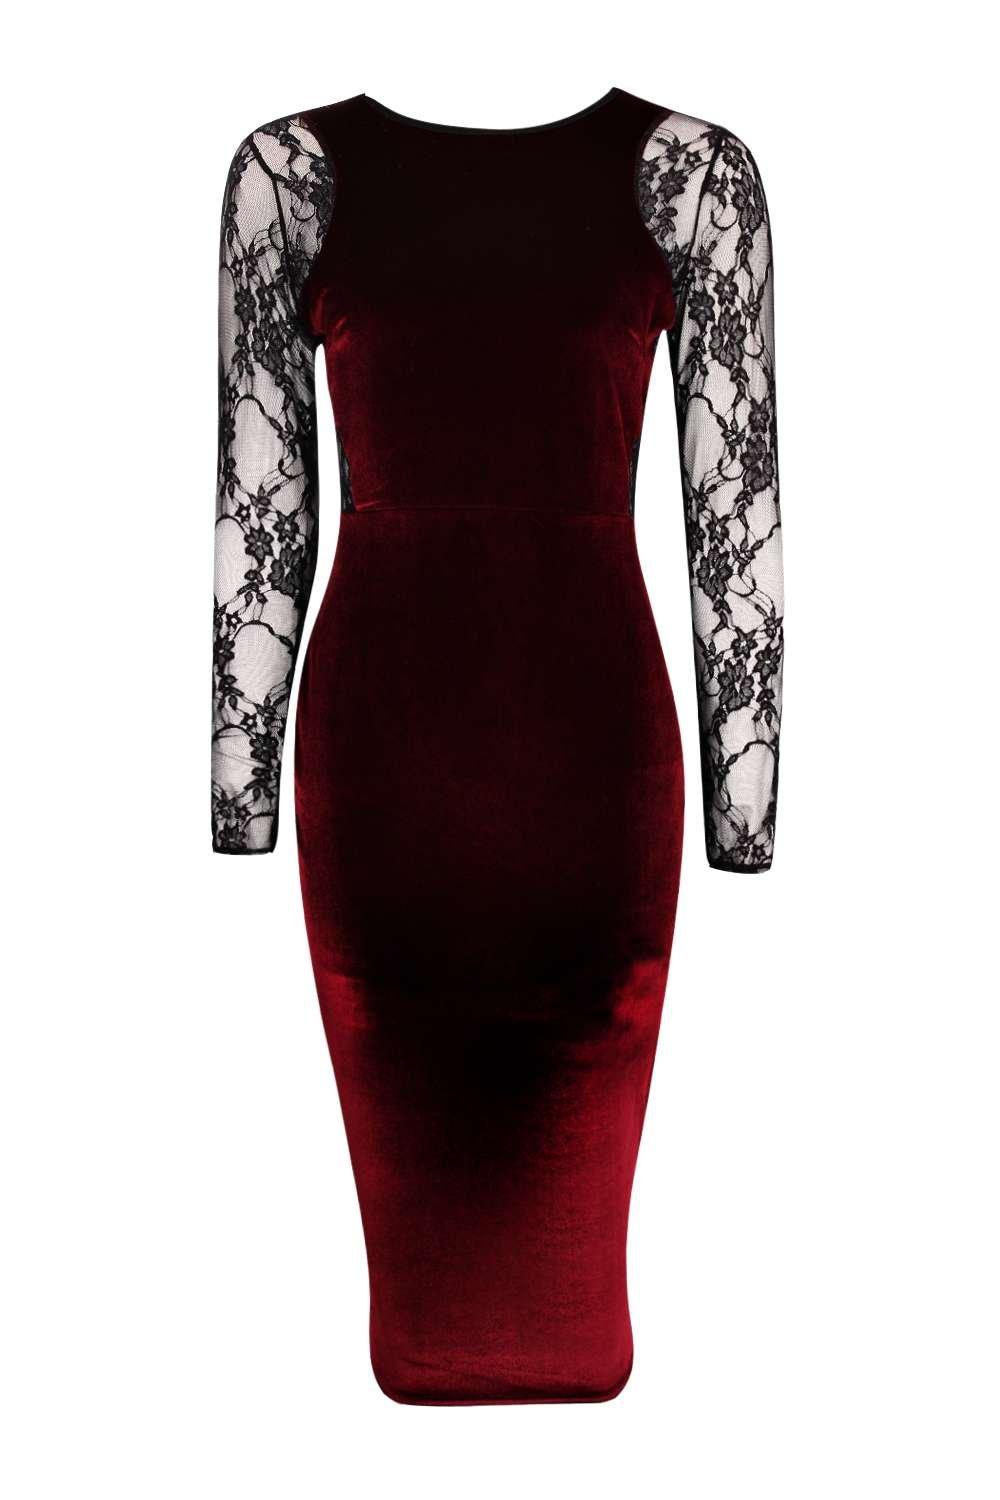 Boohoo Womens Shea Velvet & Lace Long Sleeve Bodycon Dress | eBay